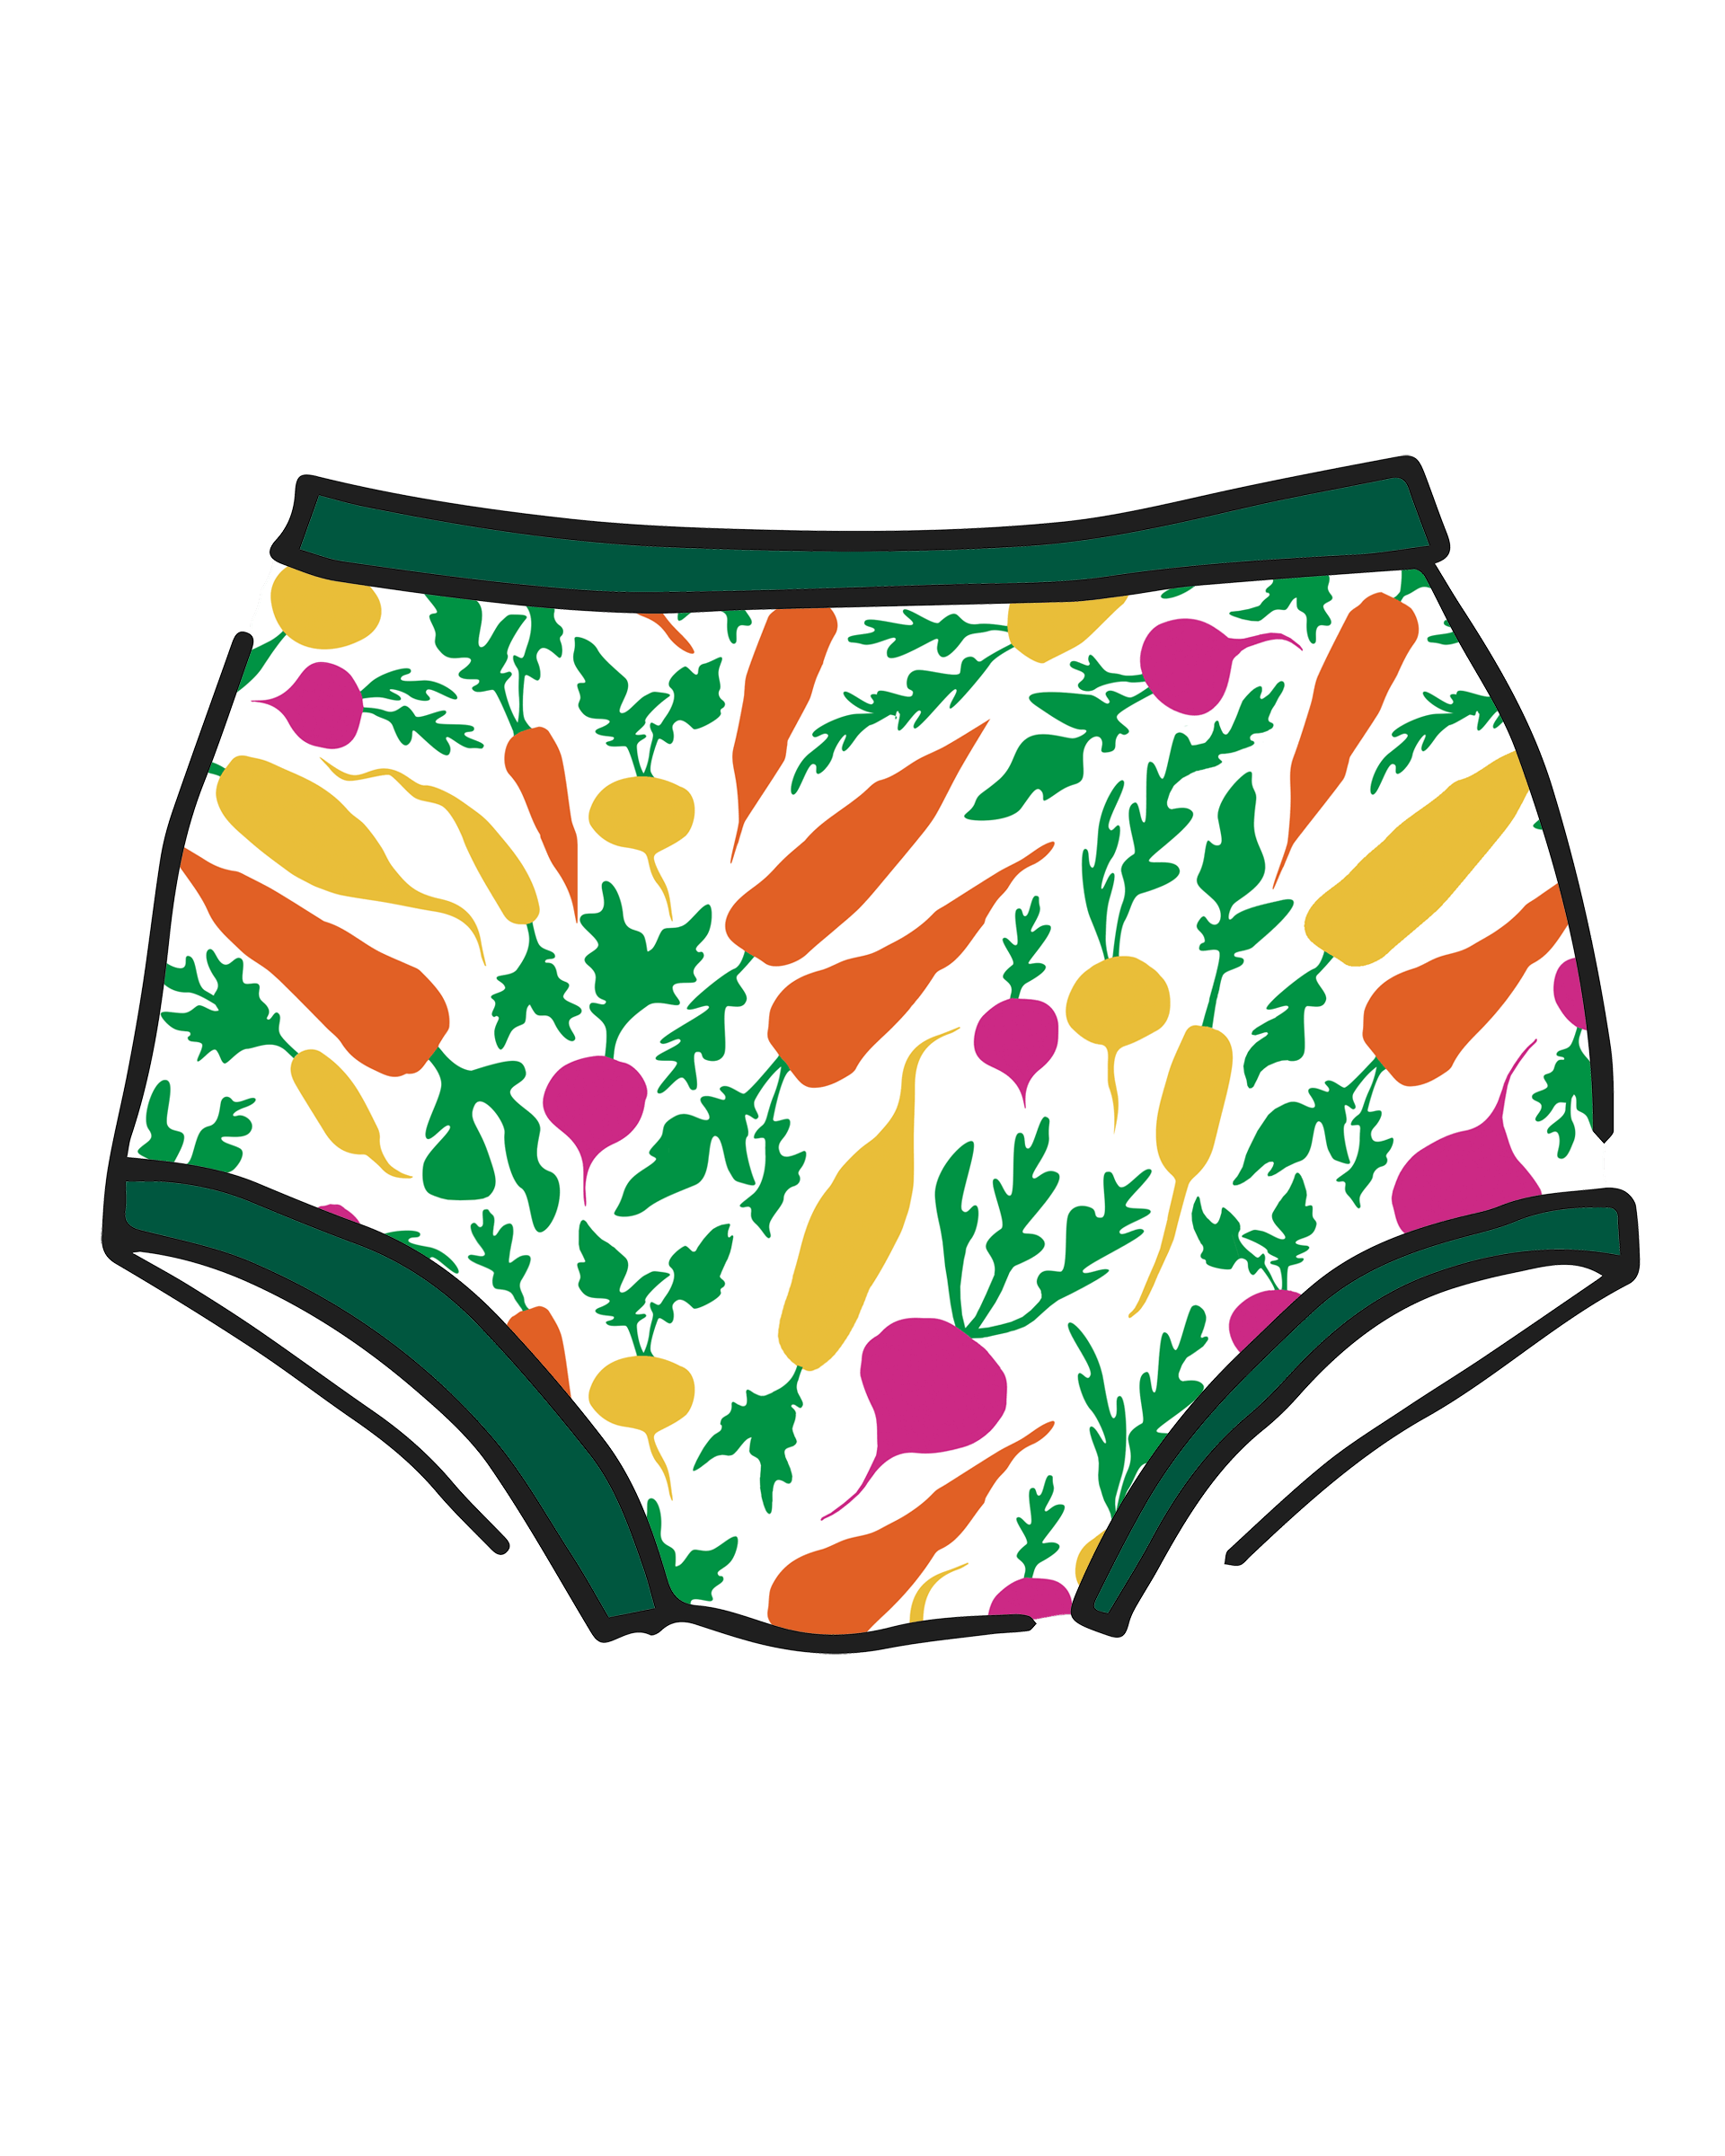 Drawing of Thunderpants Original style underwear in Root Veggies print.